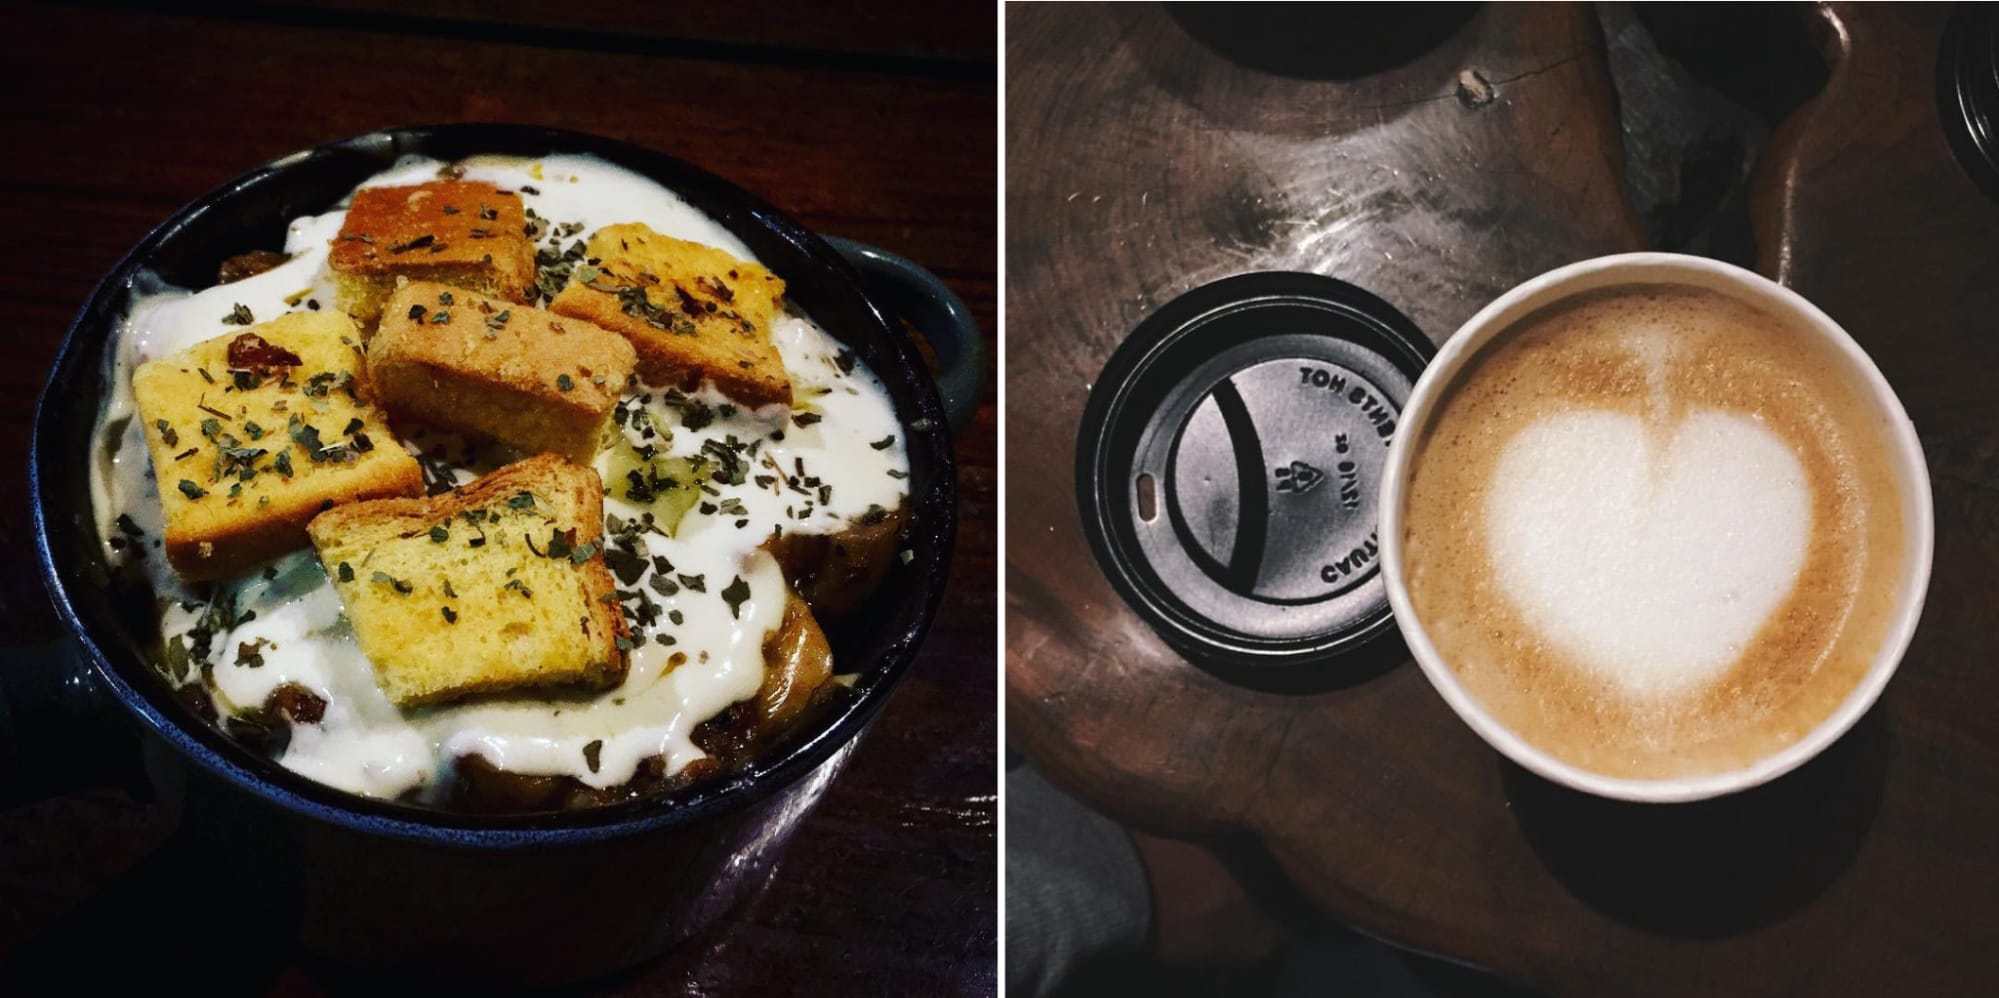 baguio city coffee shops - kaffeeklatsch food